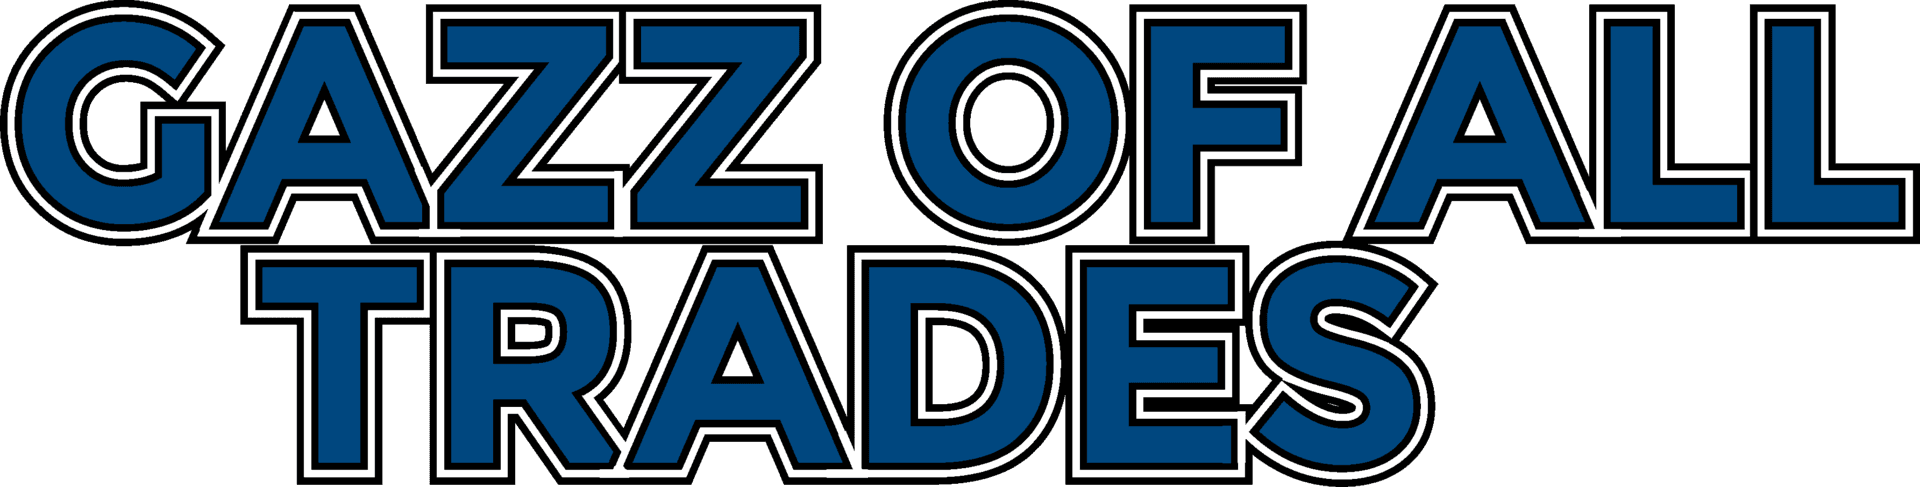 Gazz of all trades logo